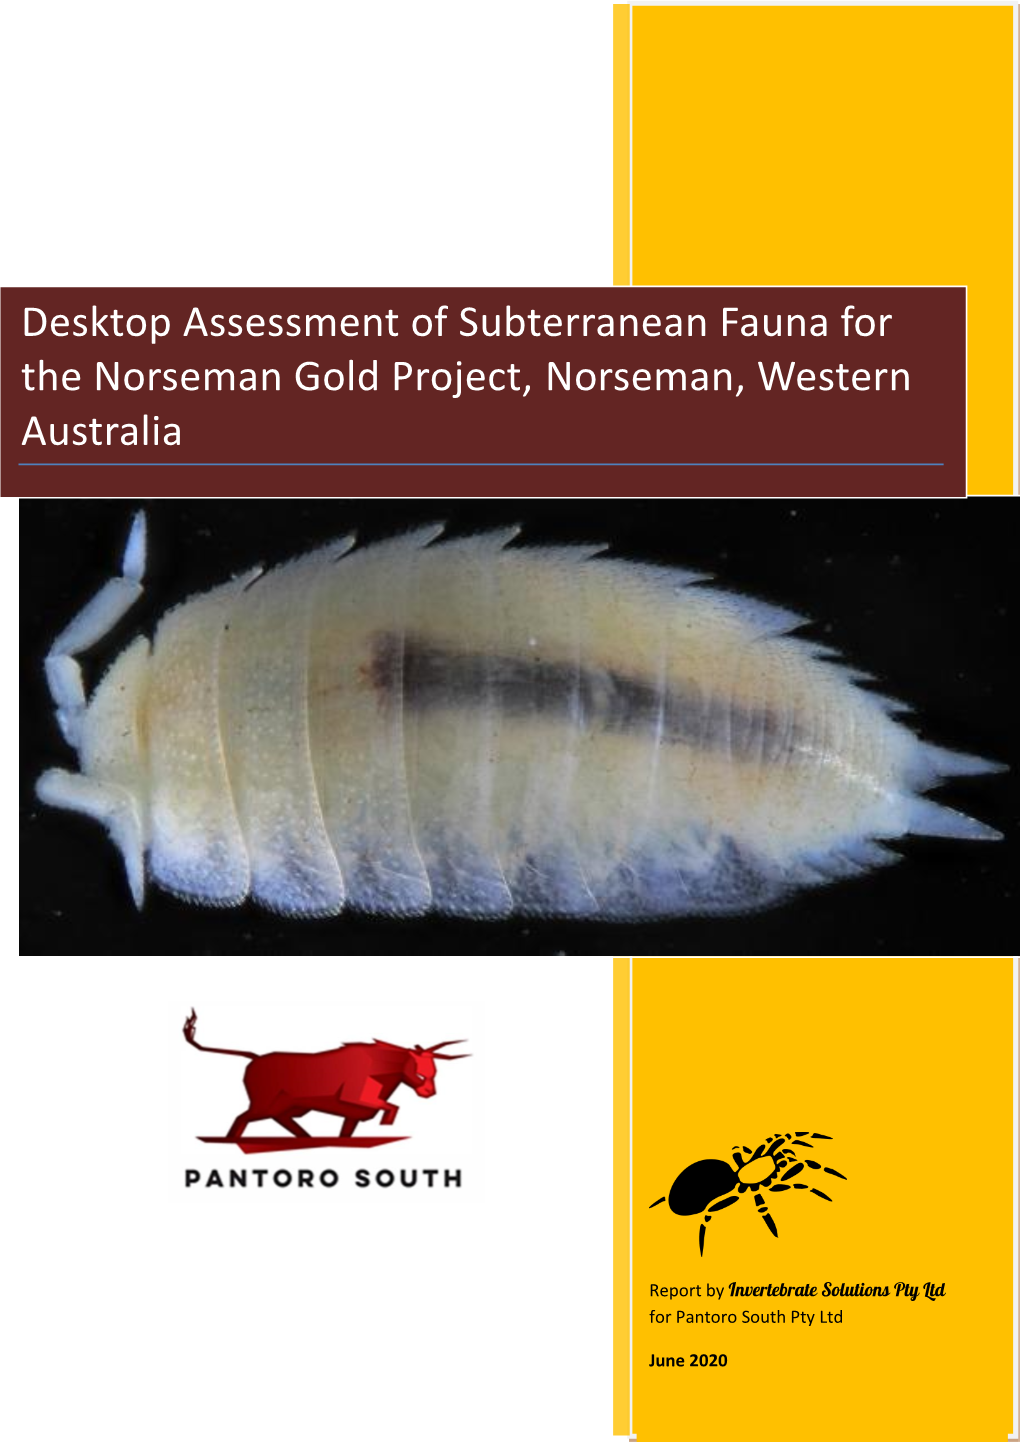 Desktop Assessment of Subterranean Fauna for the Norseman Gold Project, Norseman, Western Australia